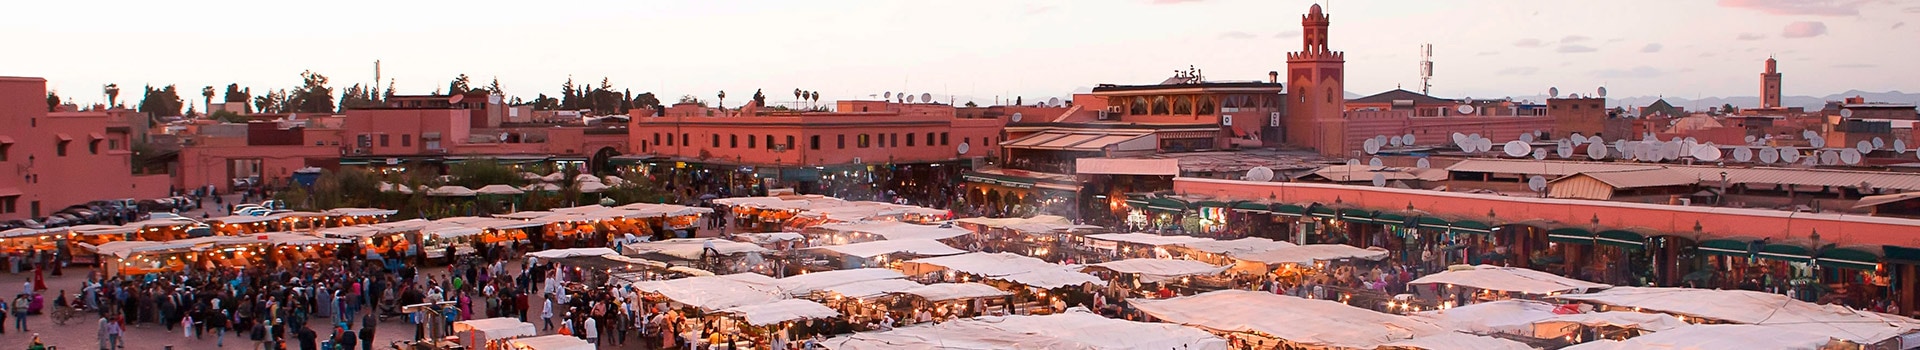 Seville - Marrakech